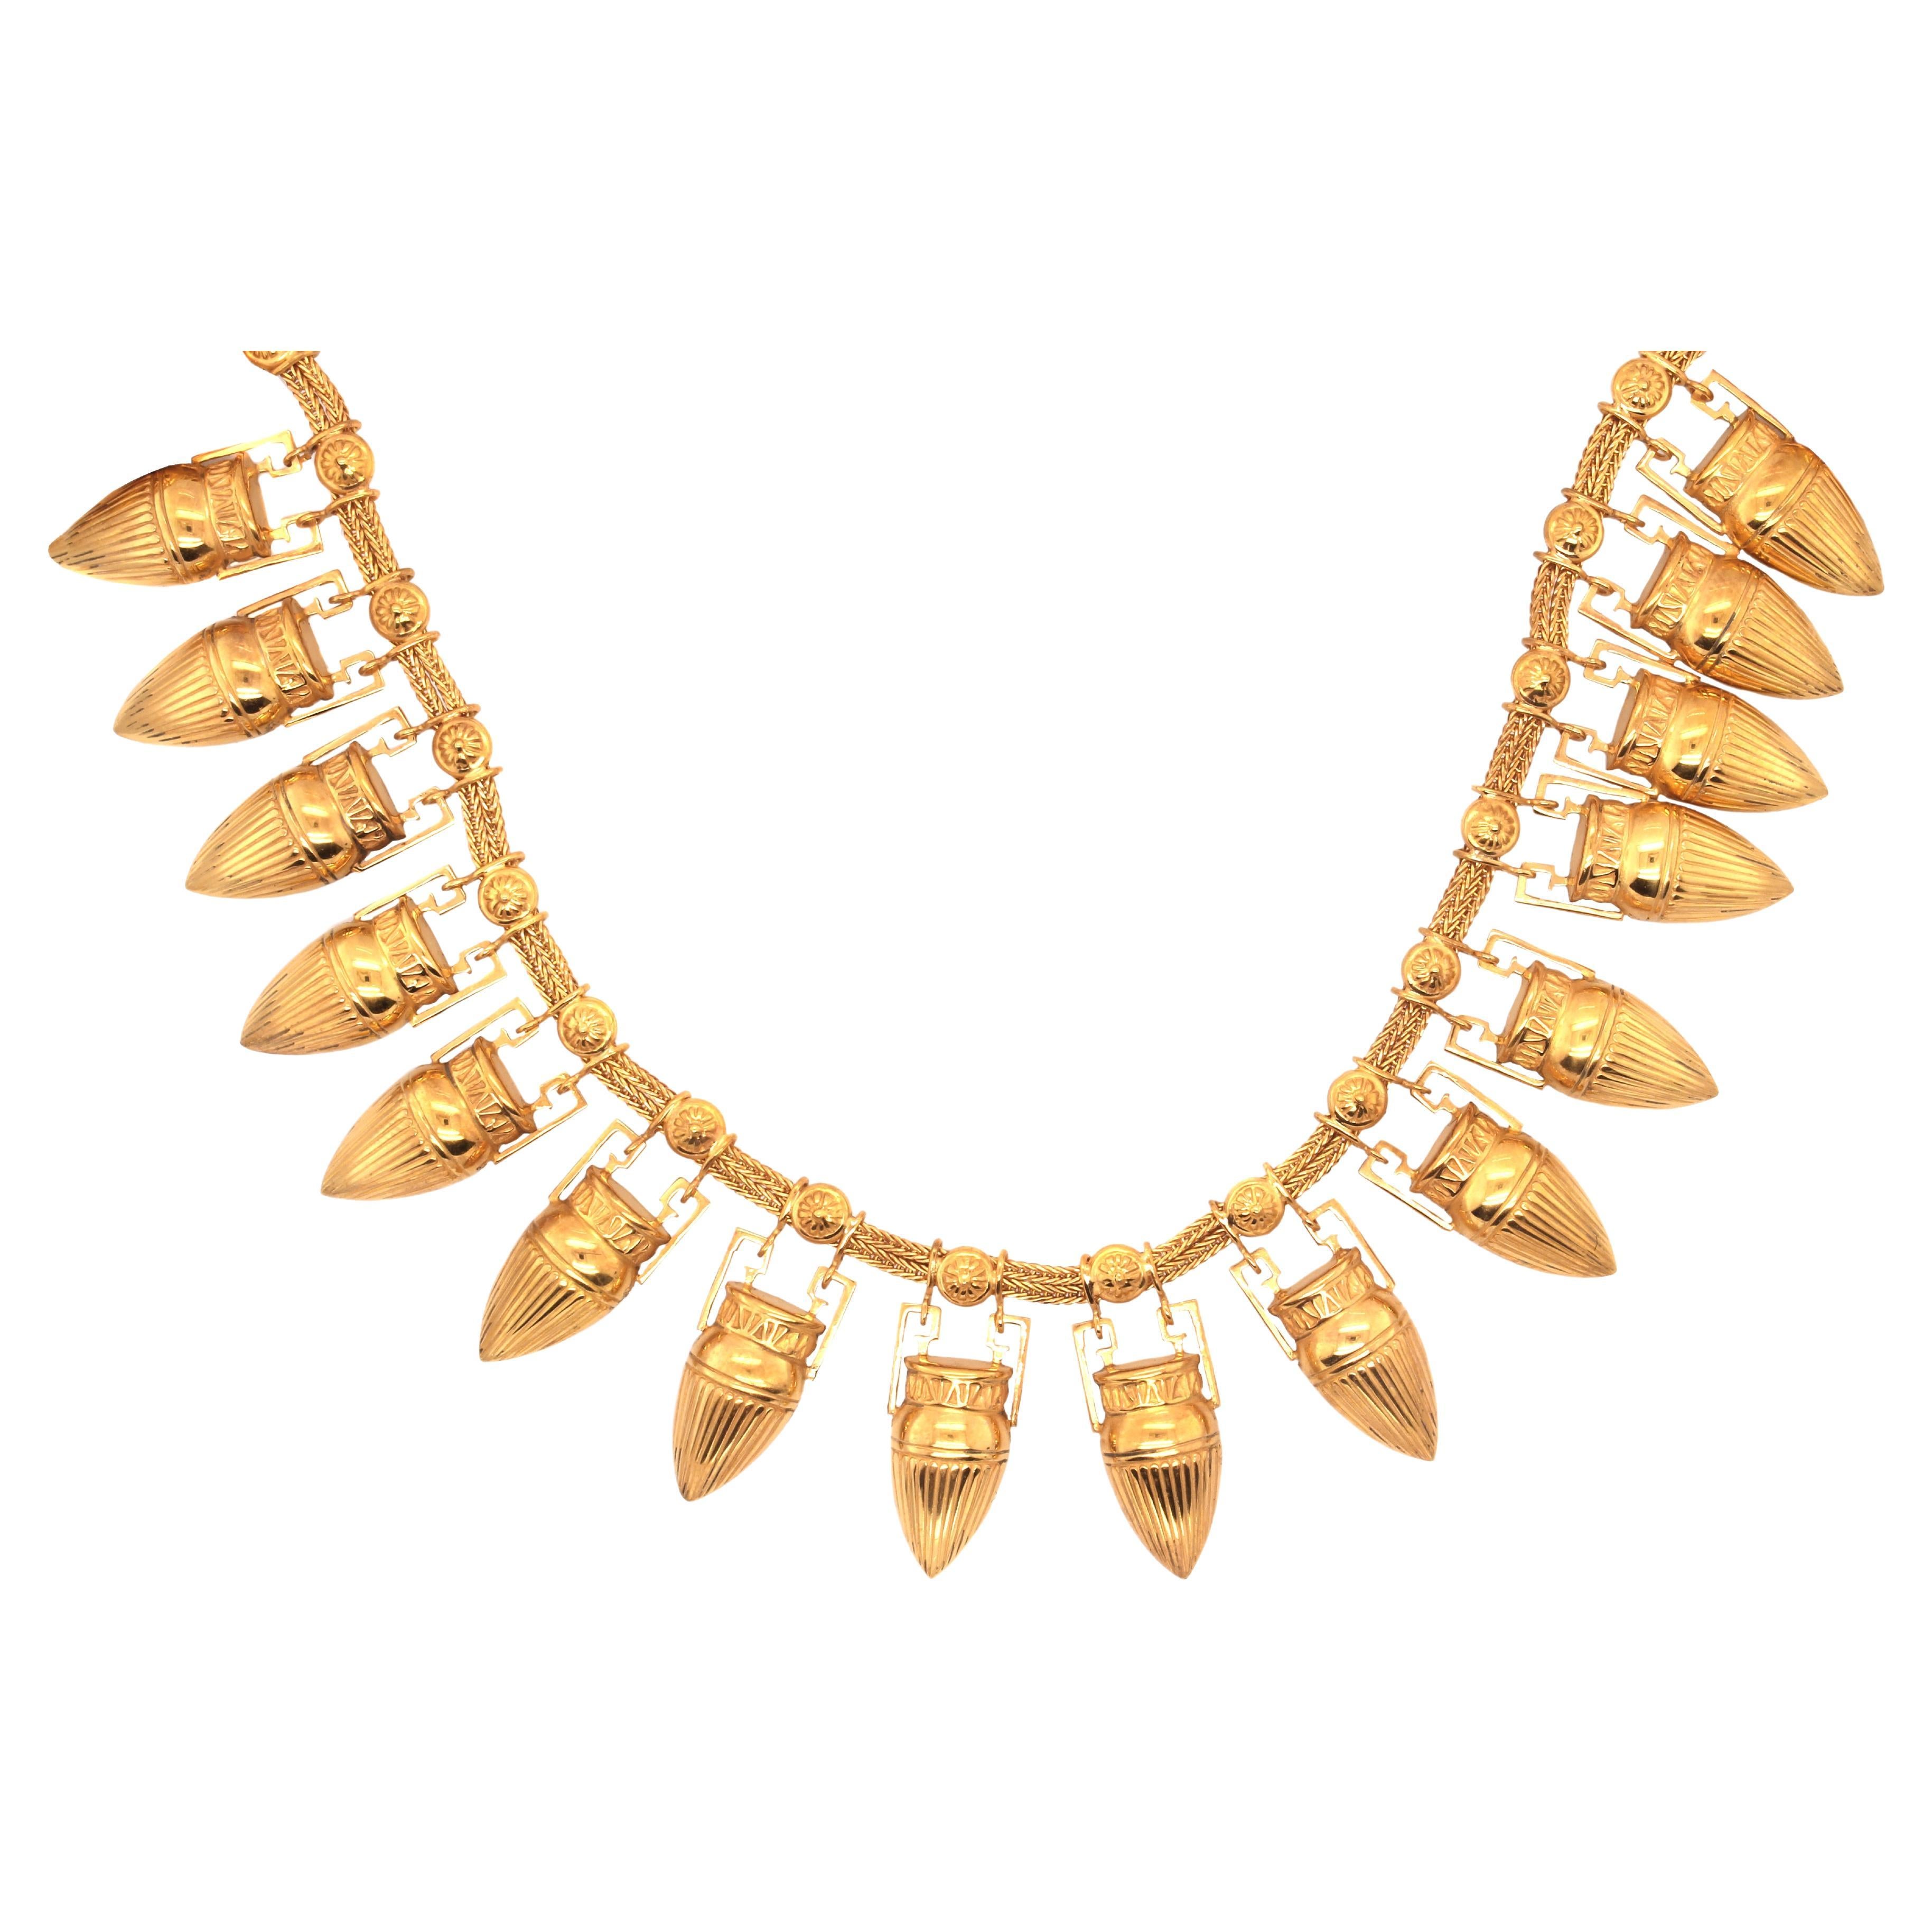 Castellani 18kt Gold Amphora Necklace For Sale